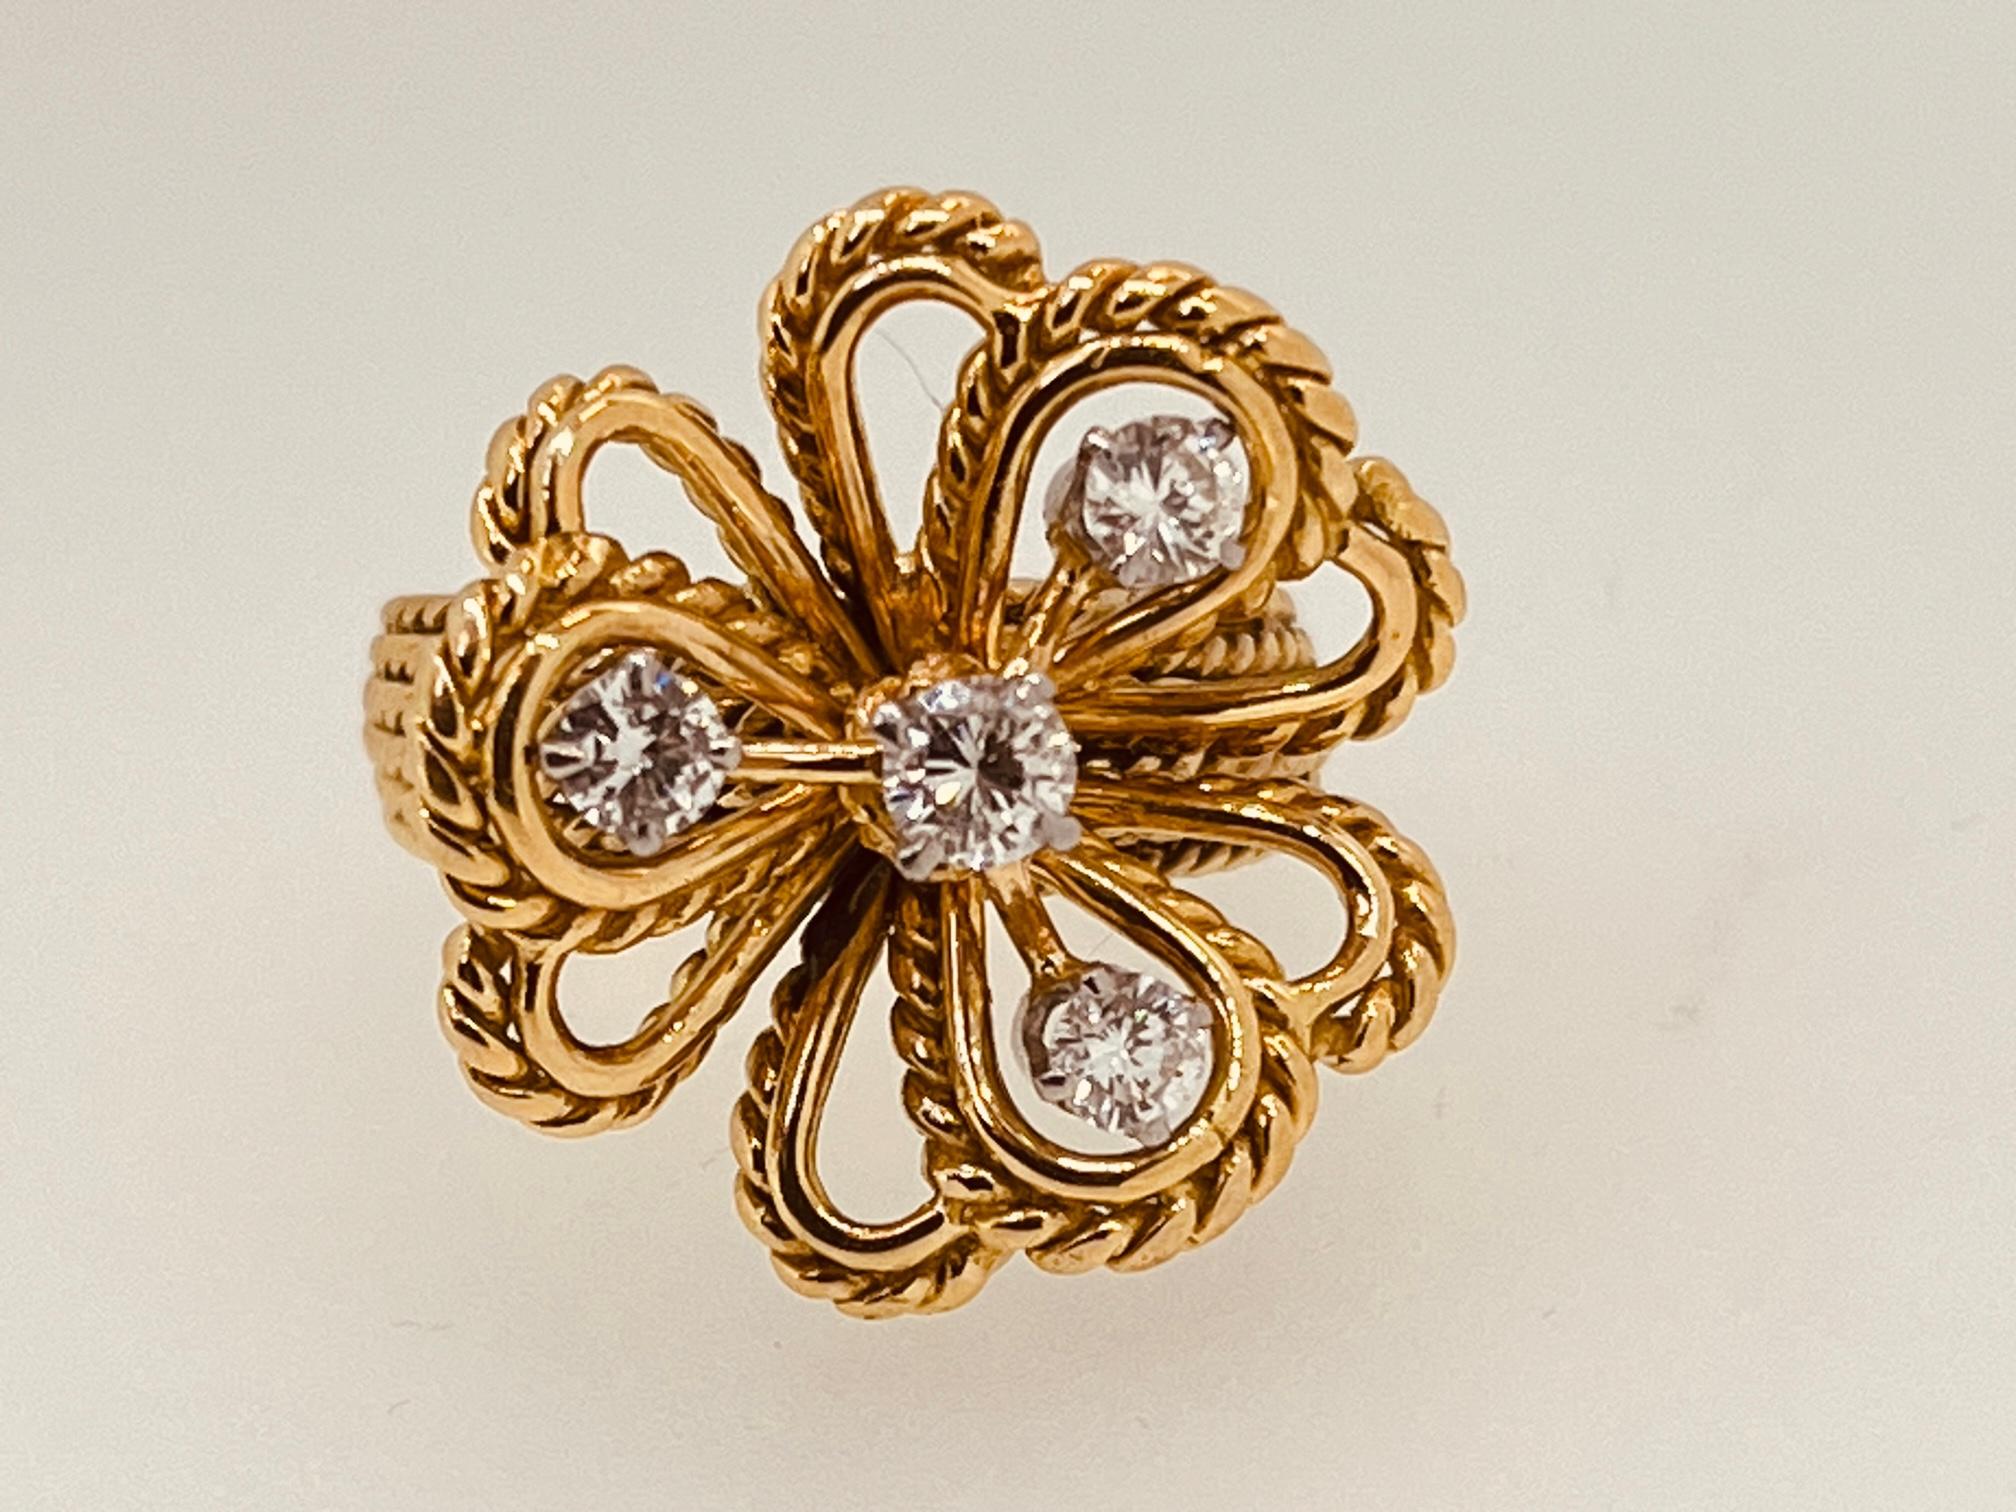 18ct Gold Vintage Flower Ring Suspending Four Brilliant Cut Diamonds Circa 1960s For Sale 2